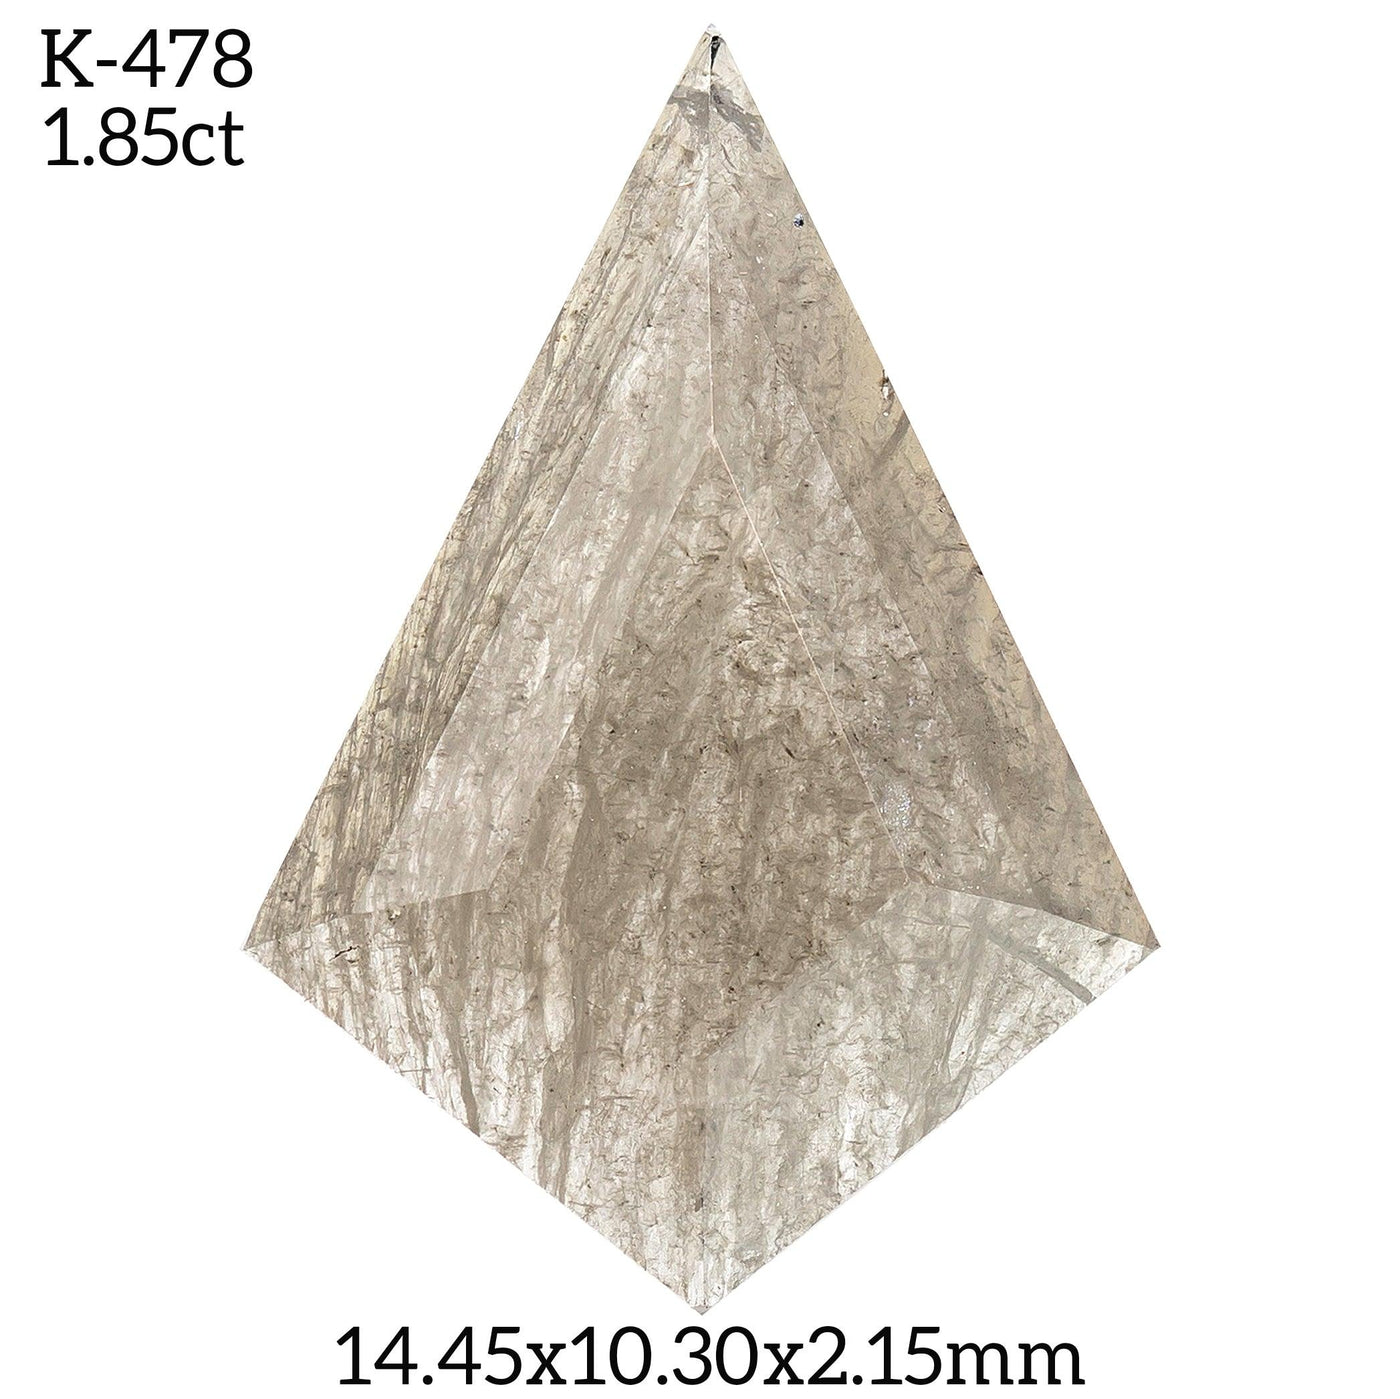 K478 - Salt and pepper kite diamond - Rubysta